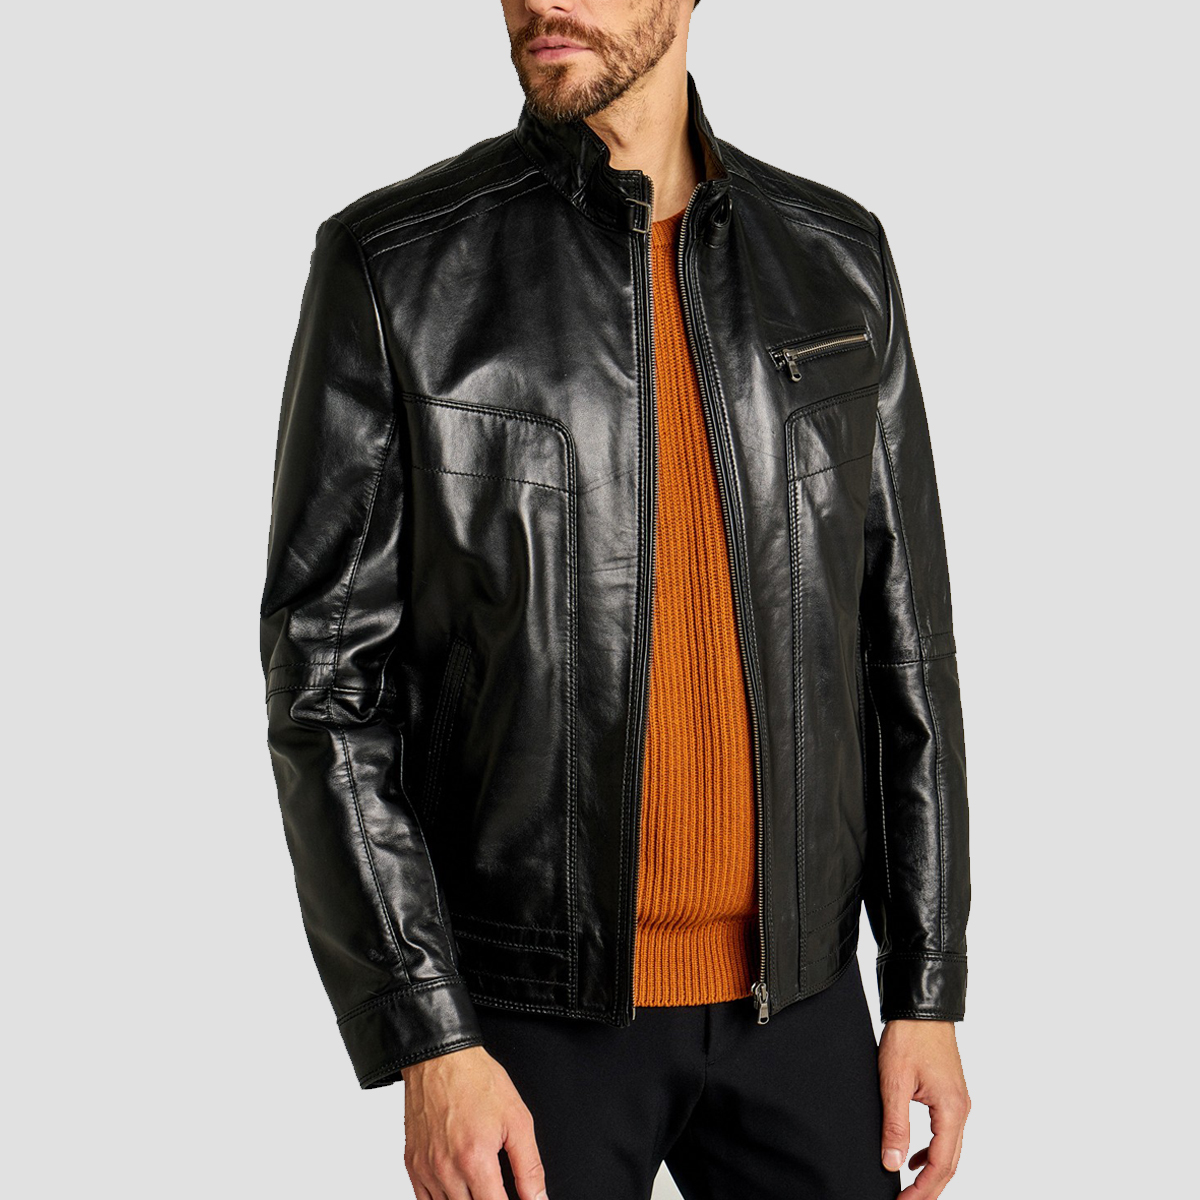 Classic Black Leather Biker Jacket - The Vintage Leather